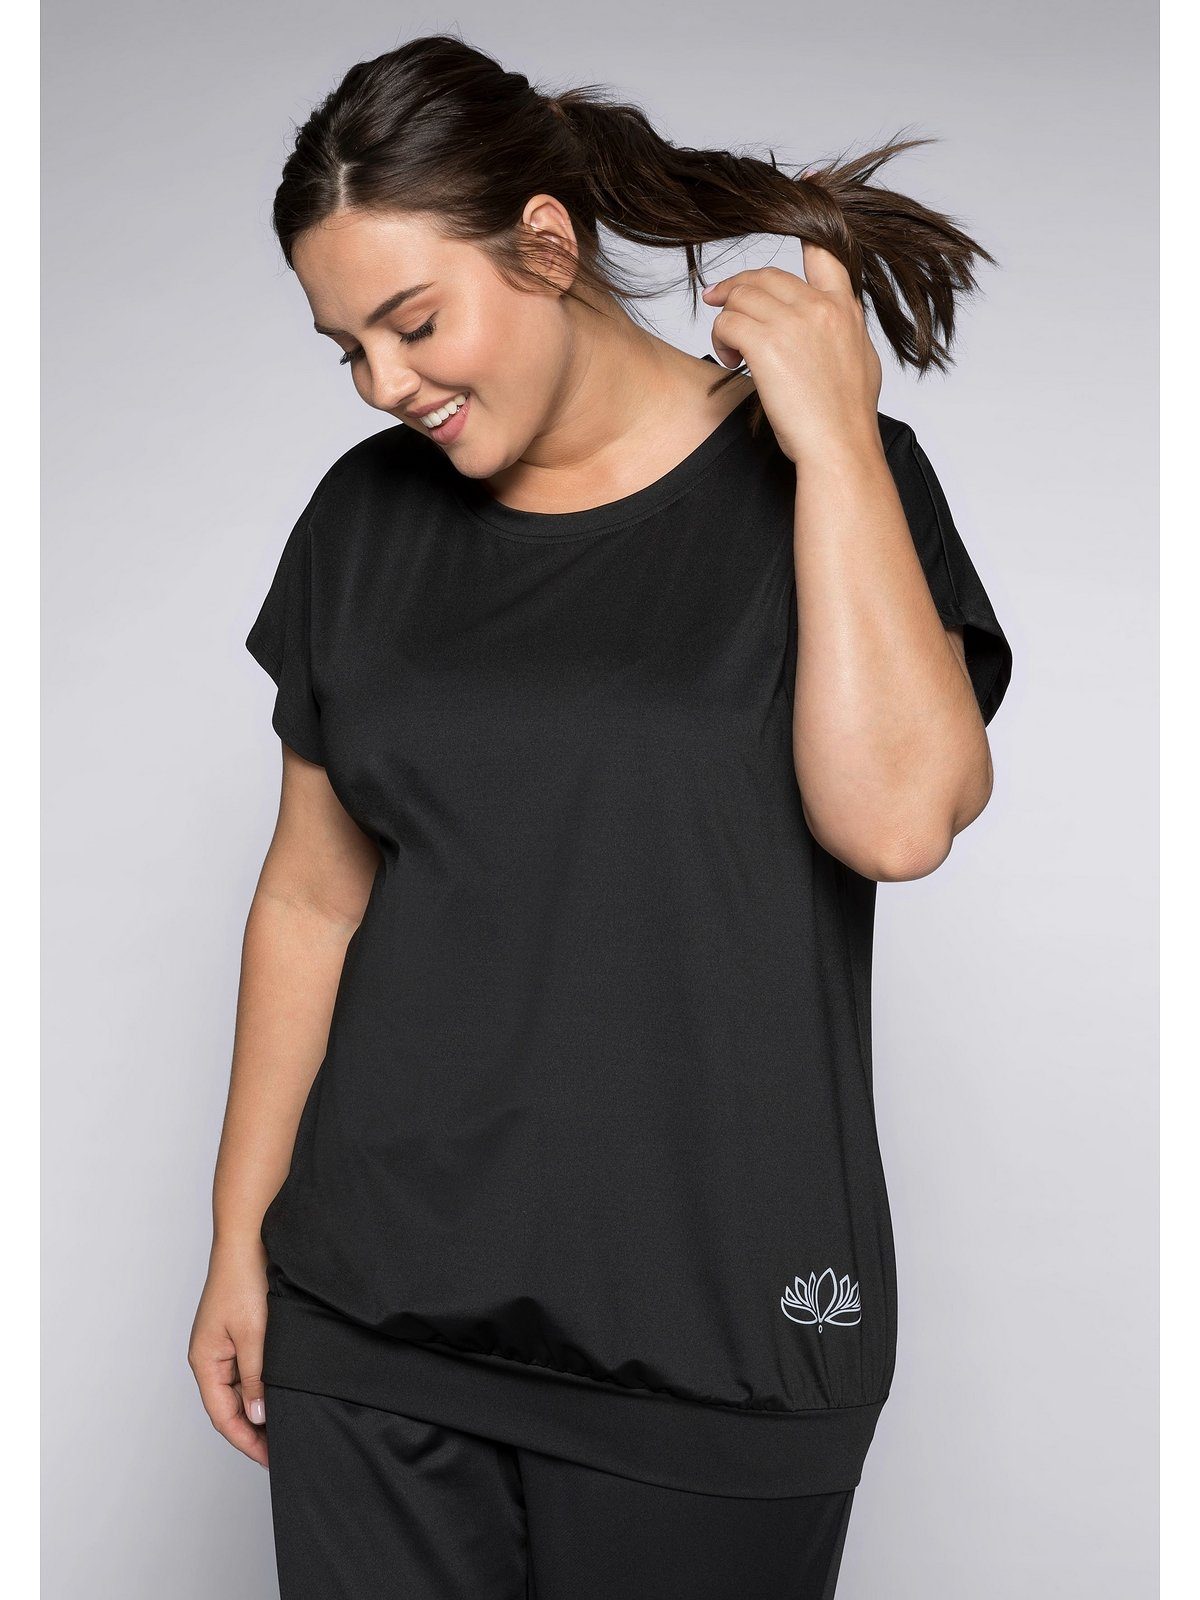 Fachgeschäft kaufen Sheego T-Shirt schwarz aus Größen Funktionsmaterial Große